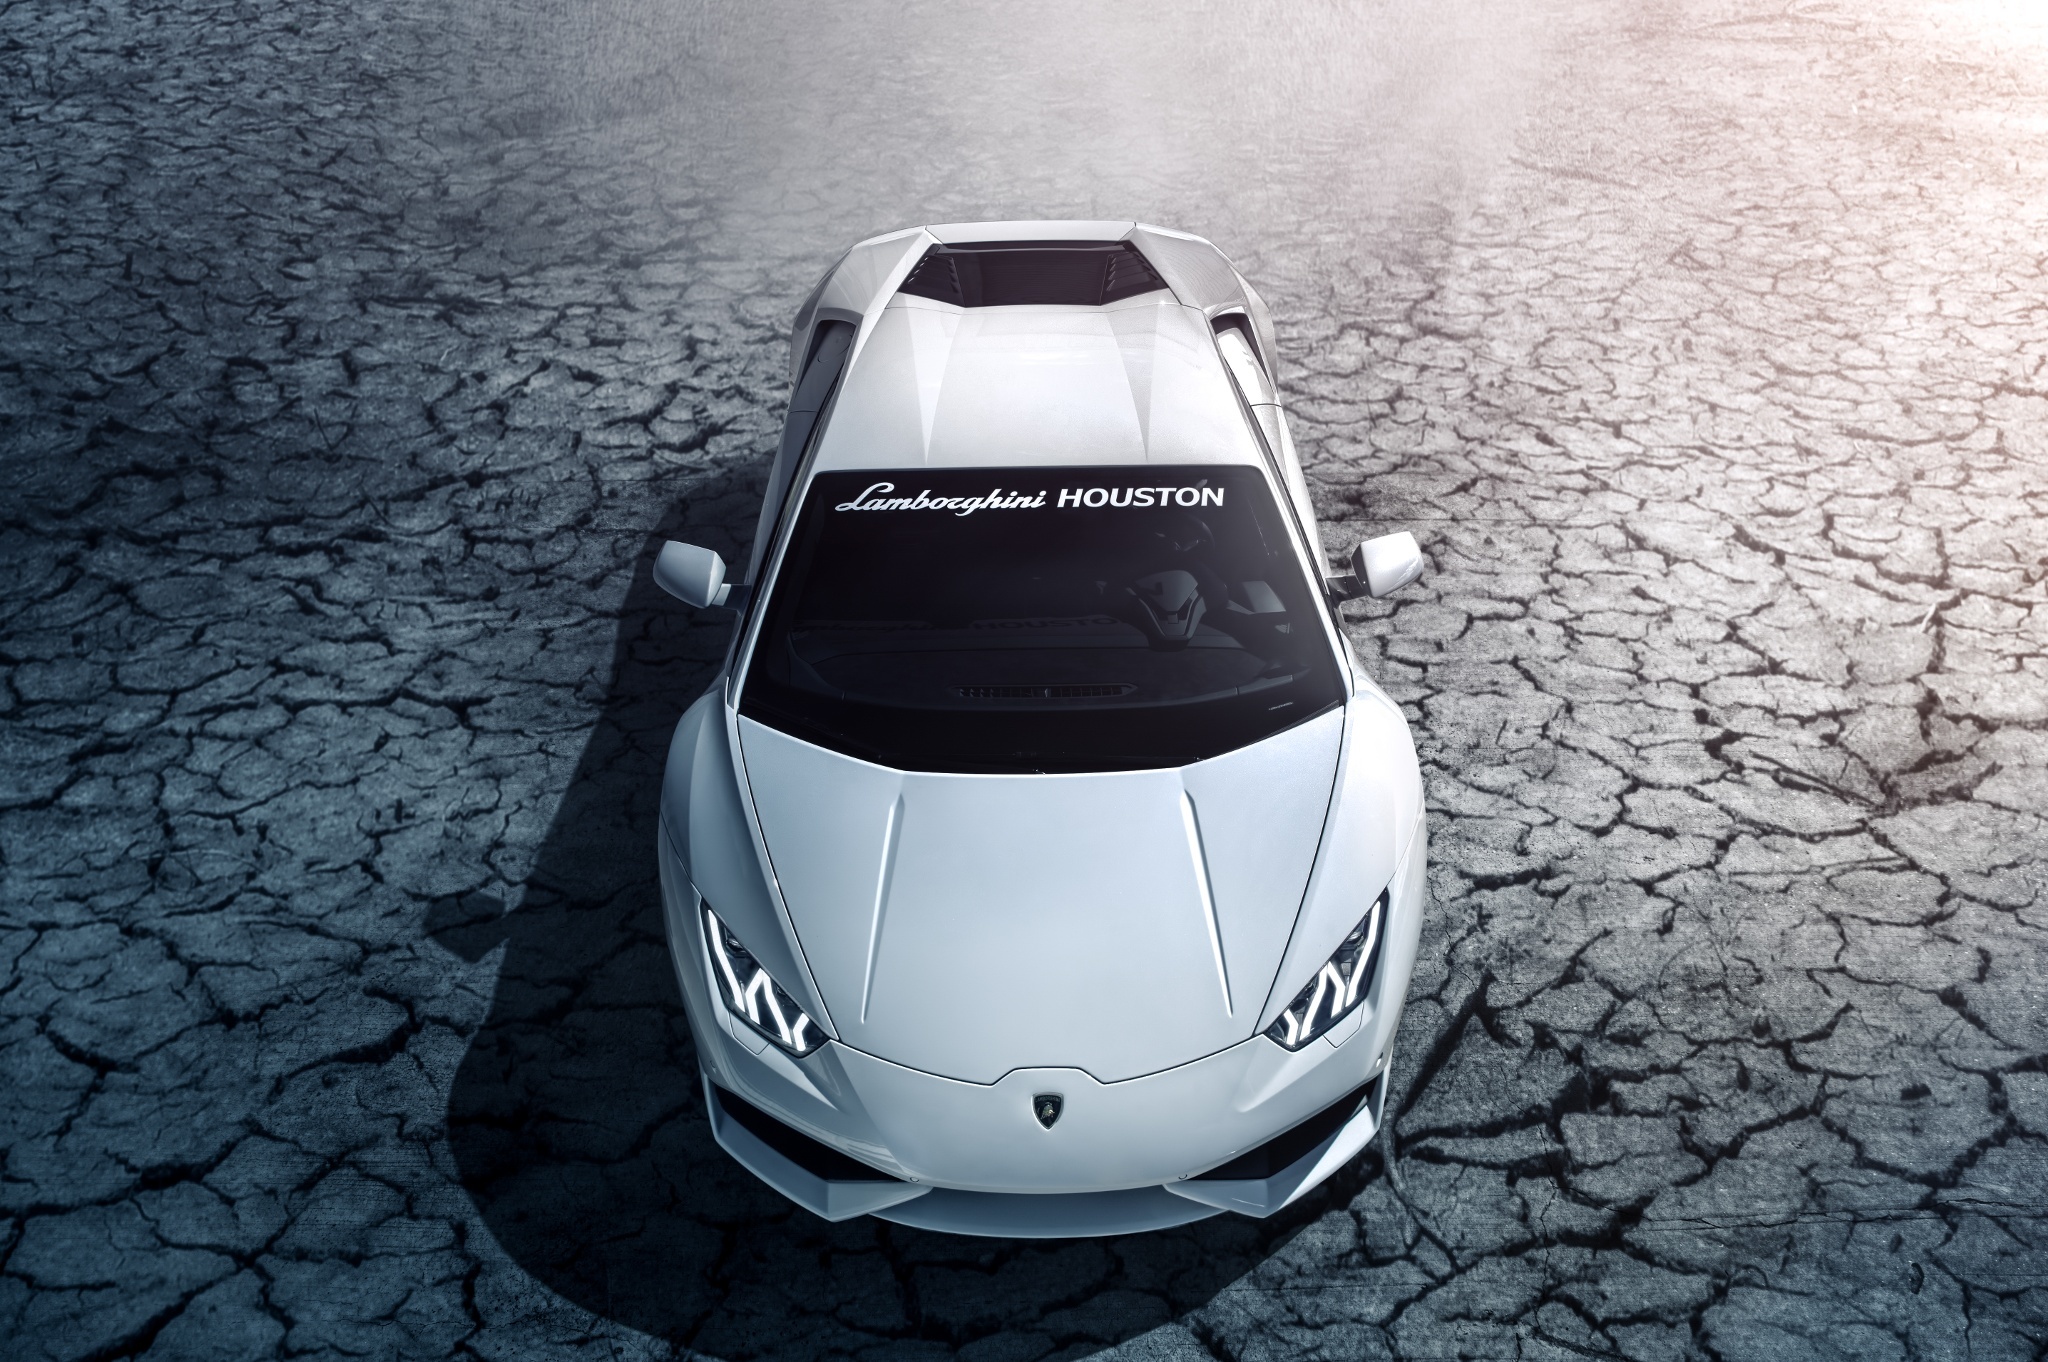 Baixe gratuitamente a imagem Lamborghini, Veículos, Lamborghini Huracán na área de trabalho do seu PC